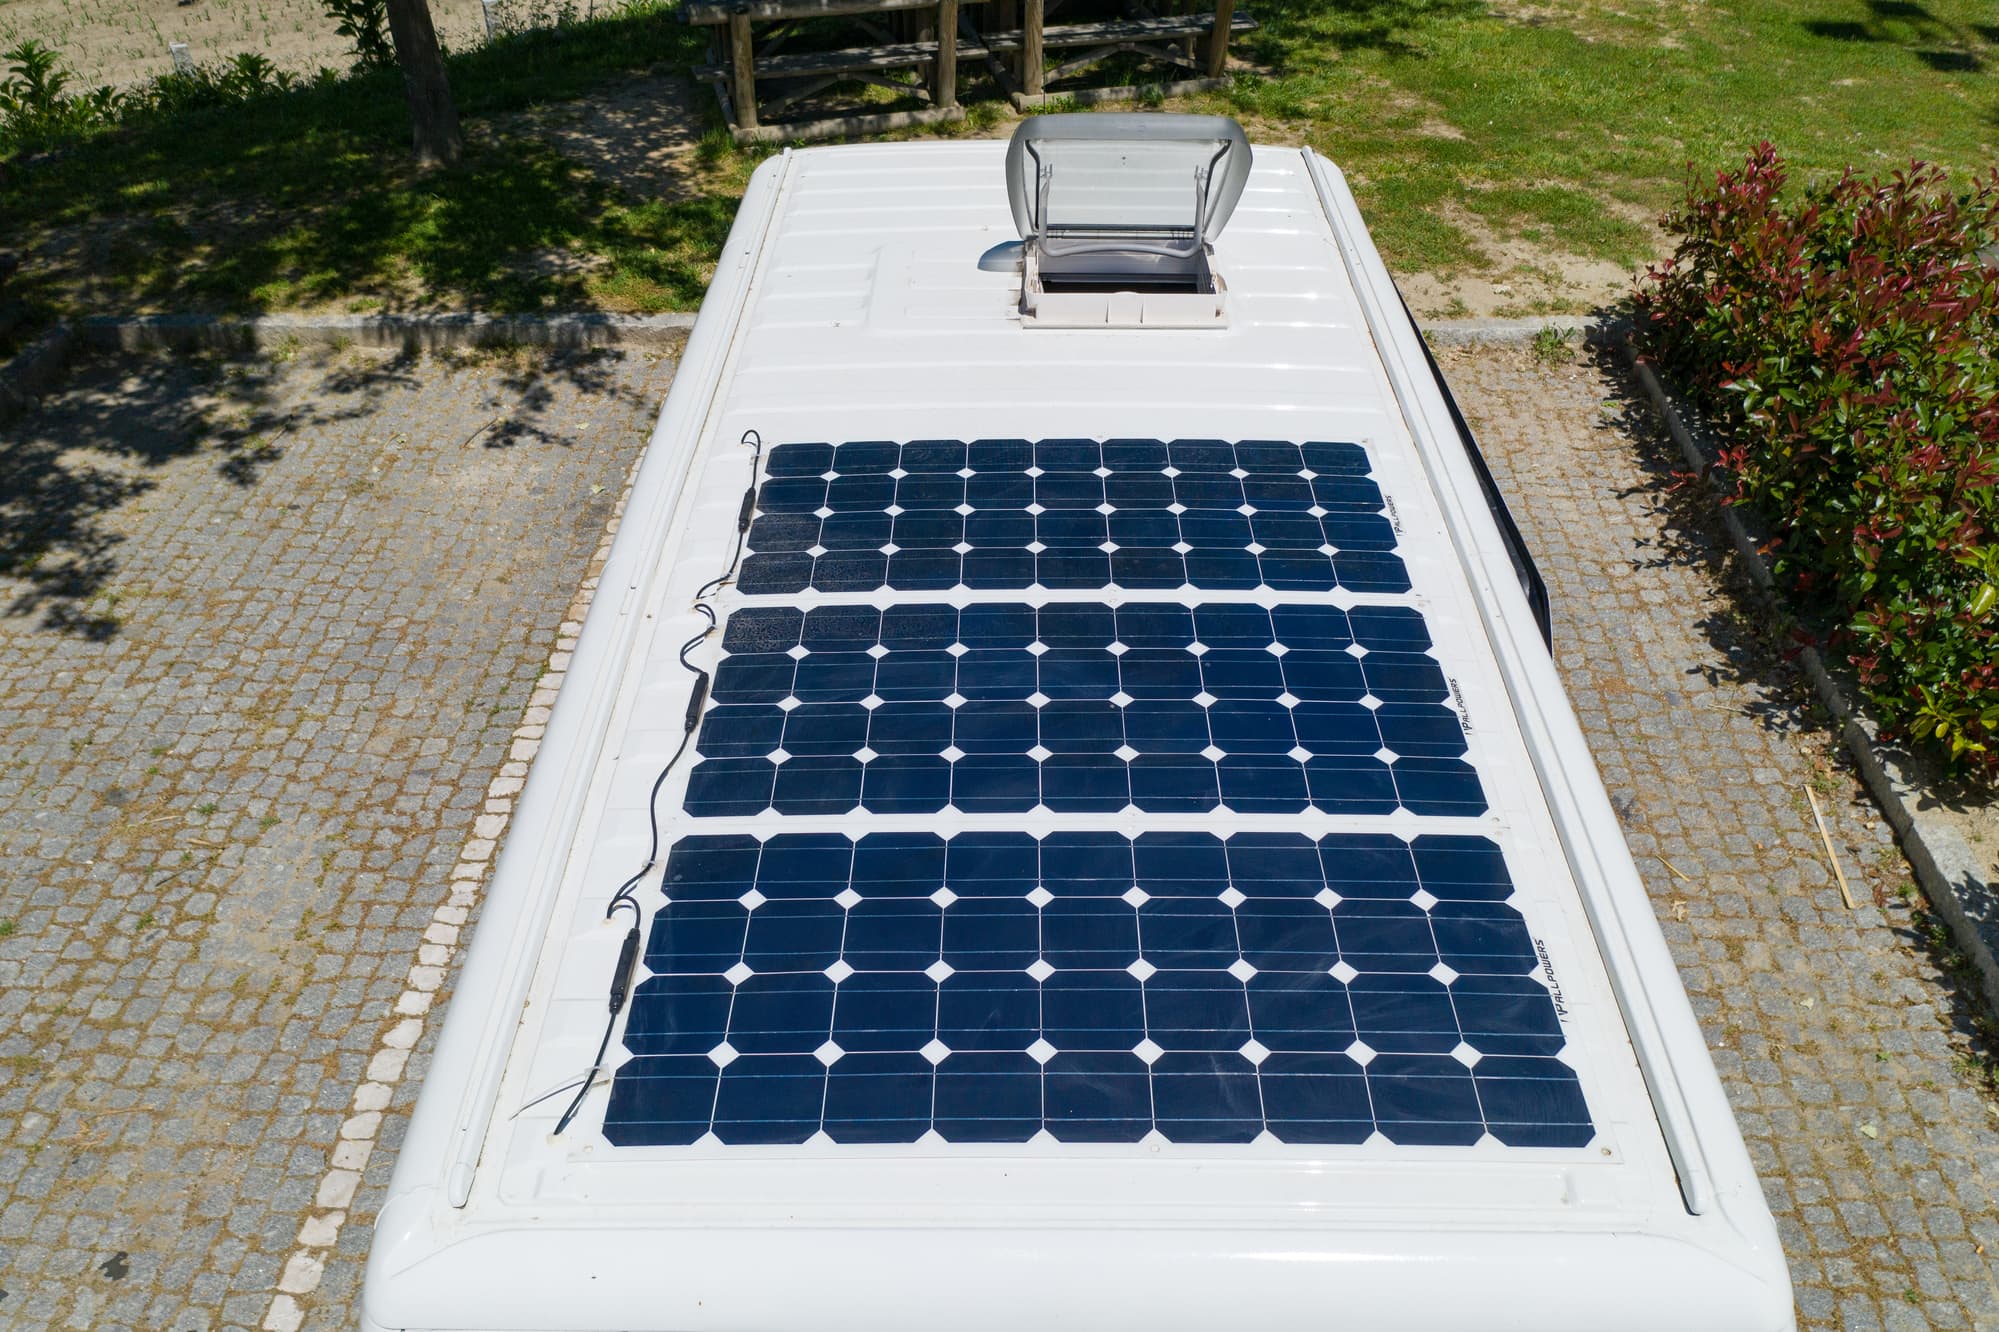 https://www.solaranlagen-abc.de/wp-content/uploads/2021/03/solardach-wohnmobil.jpg